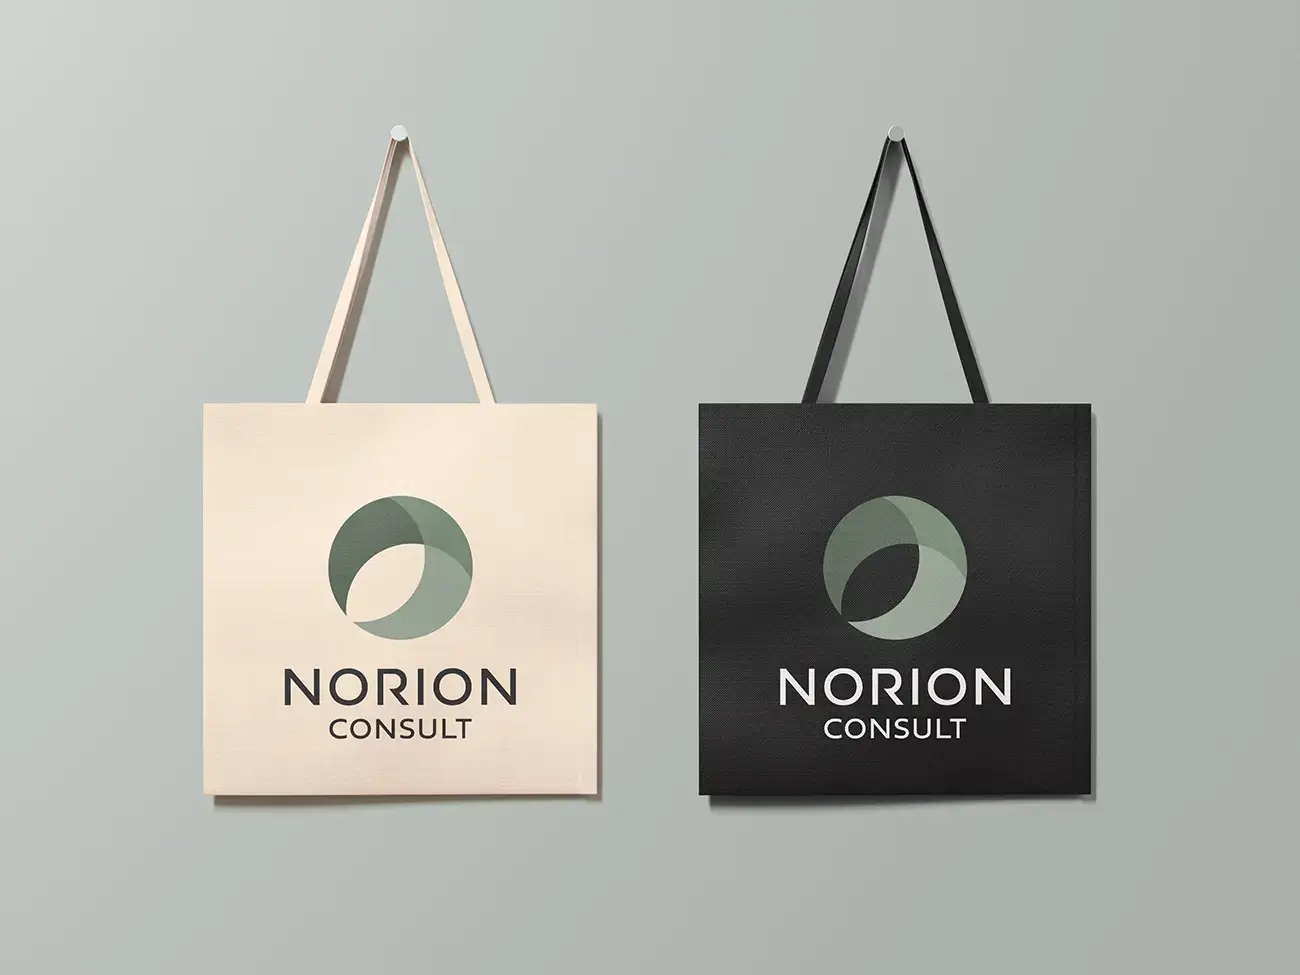 Norion Consult case